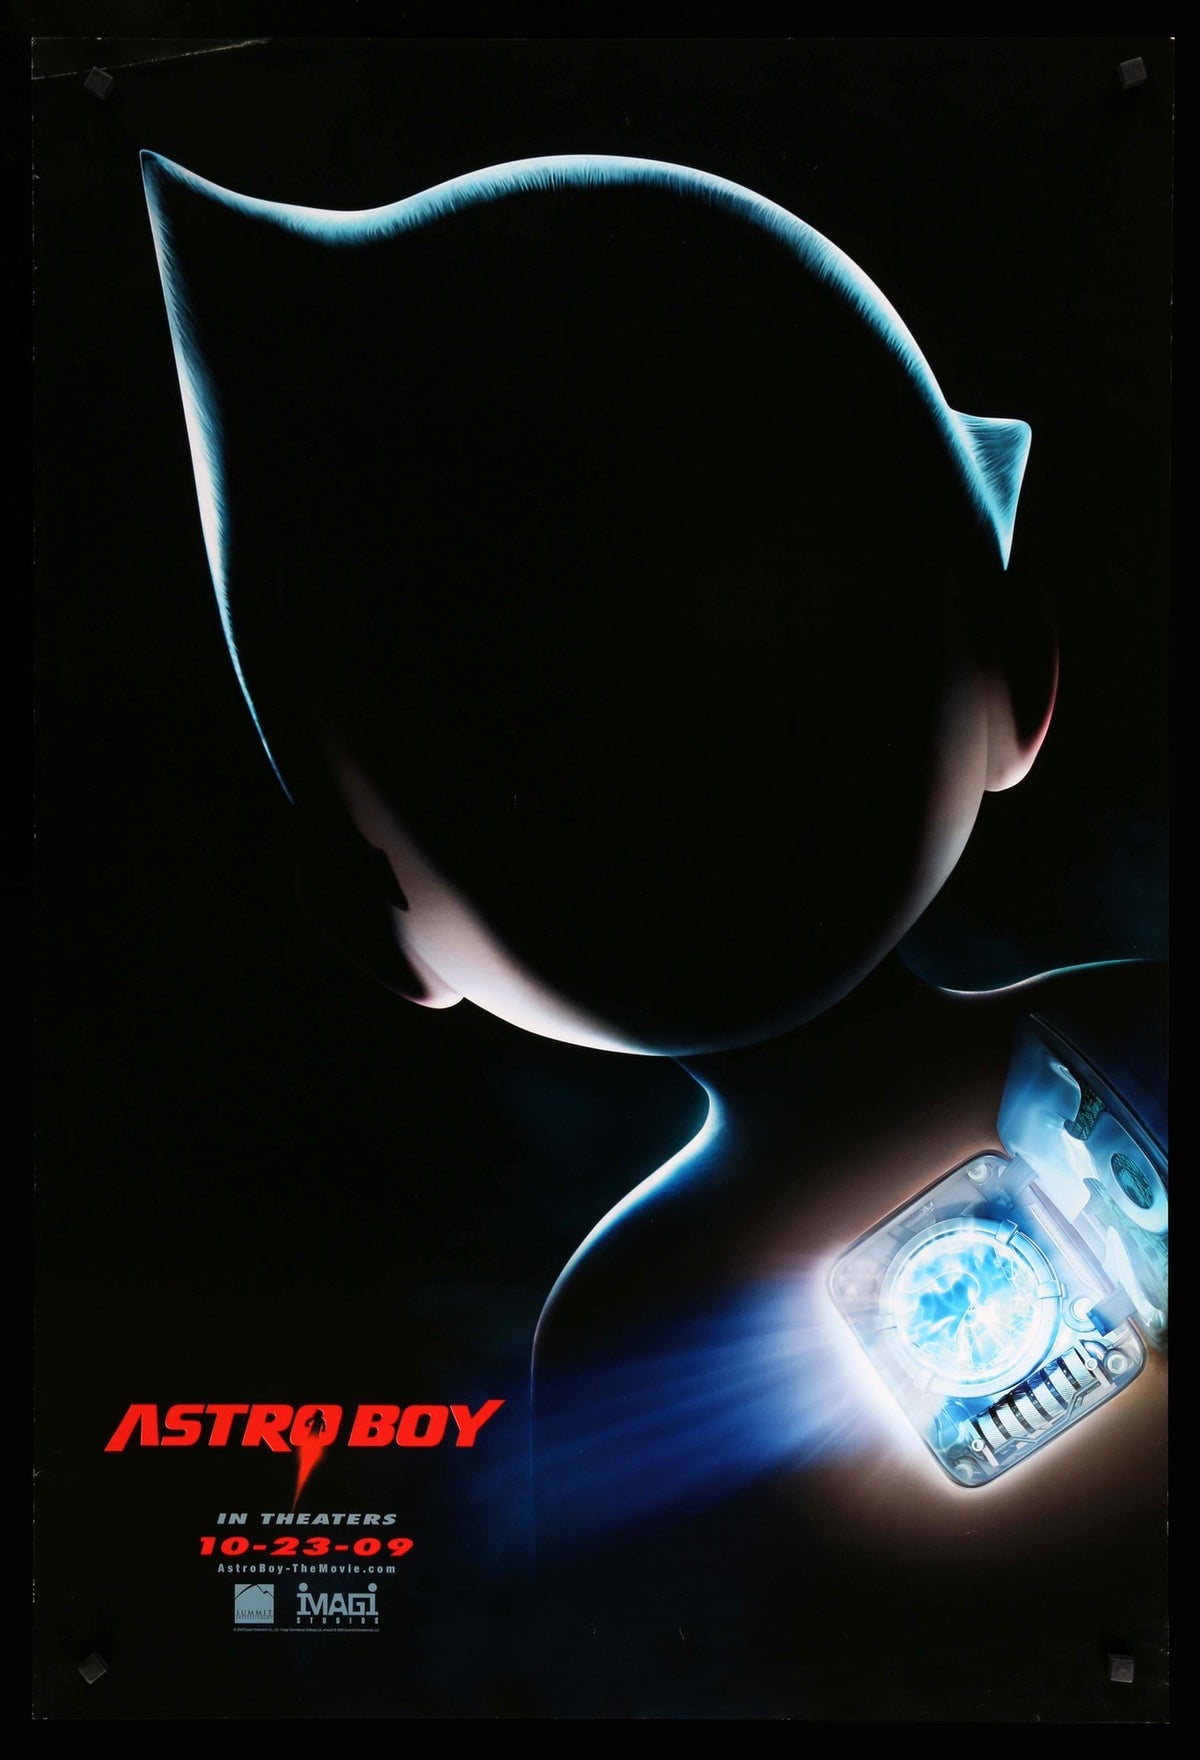 Astro Boy (2009) original movie poster for sale at Original Film Art